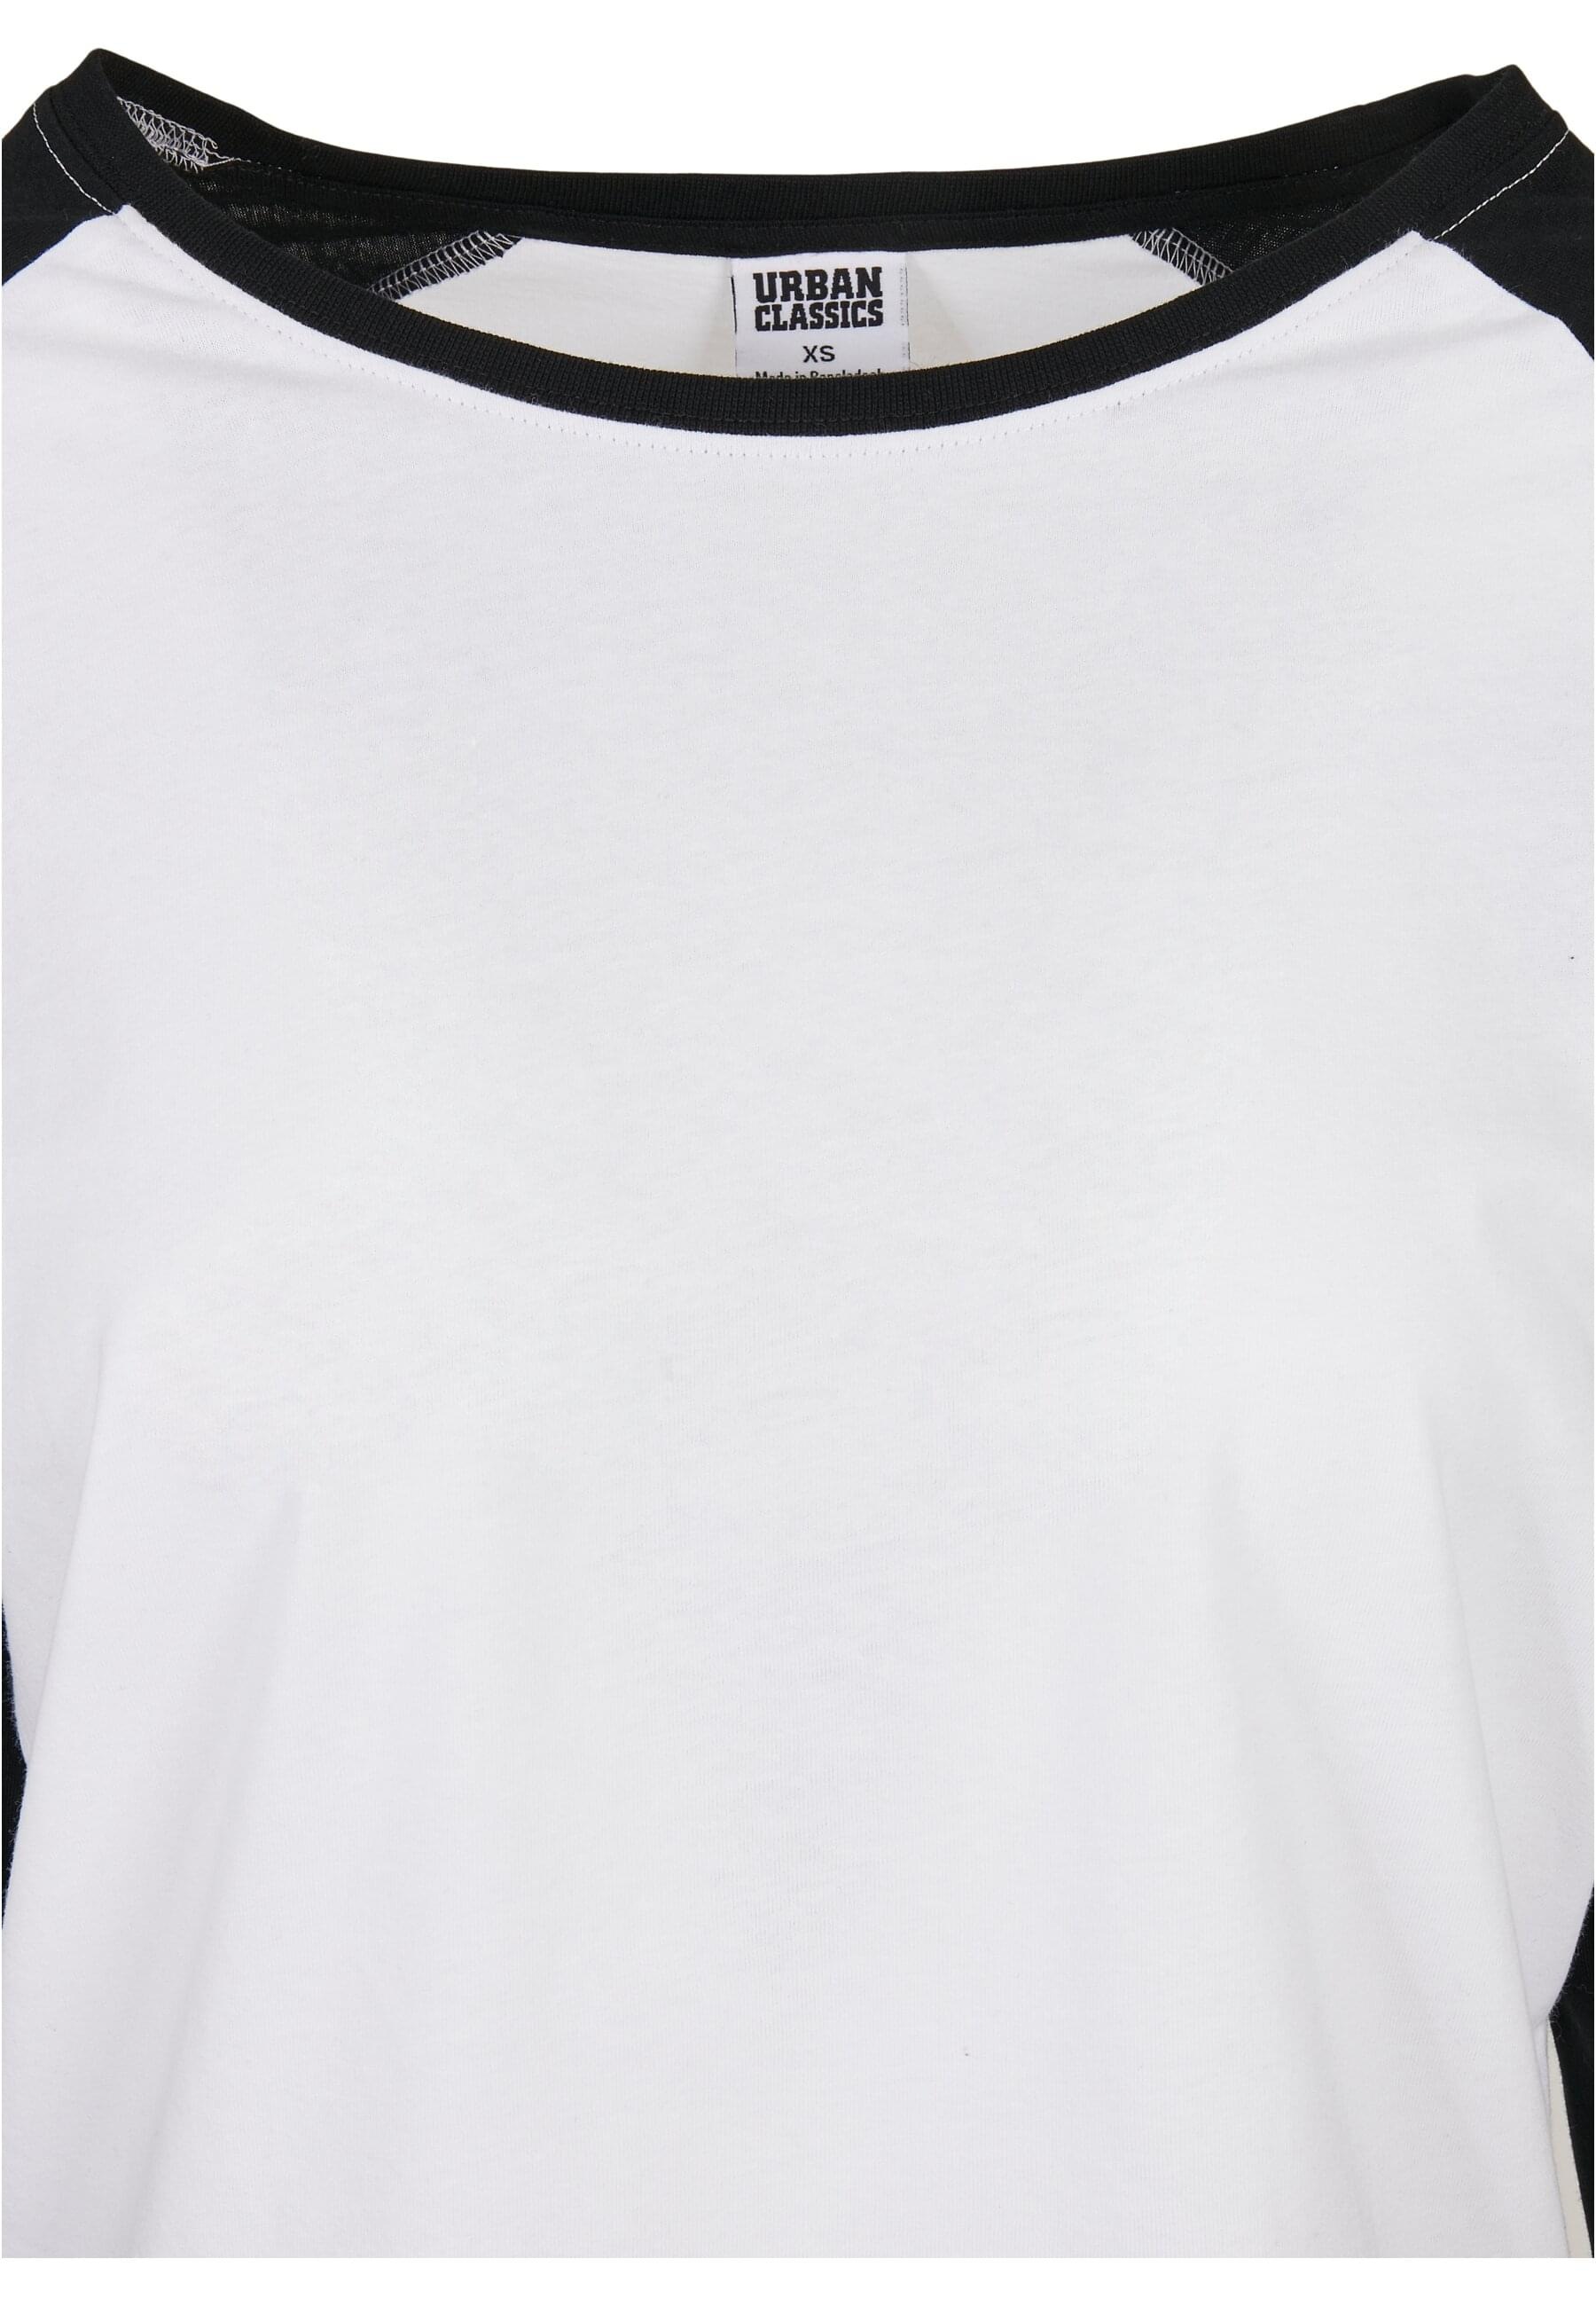 tlg.) (1 URBAN Longsleeve«, Ladies Raglan Langarmshirt für BAUR CLASSICS »Damen kaufen | Contrast